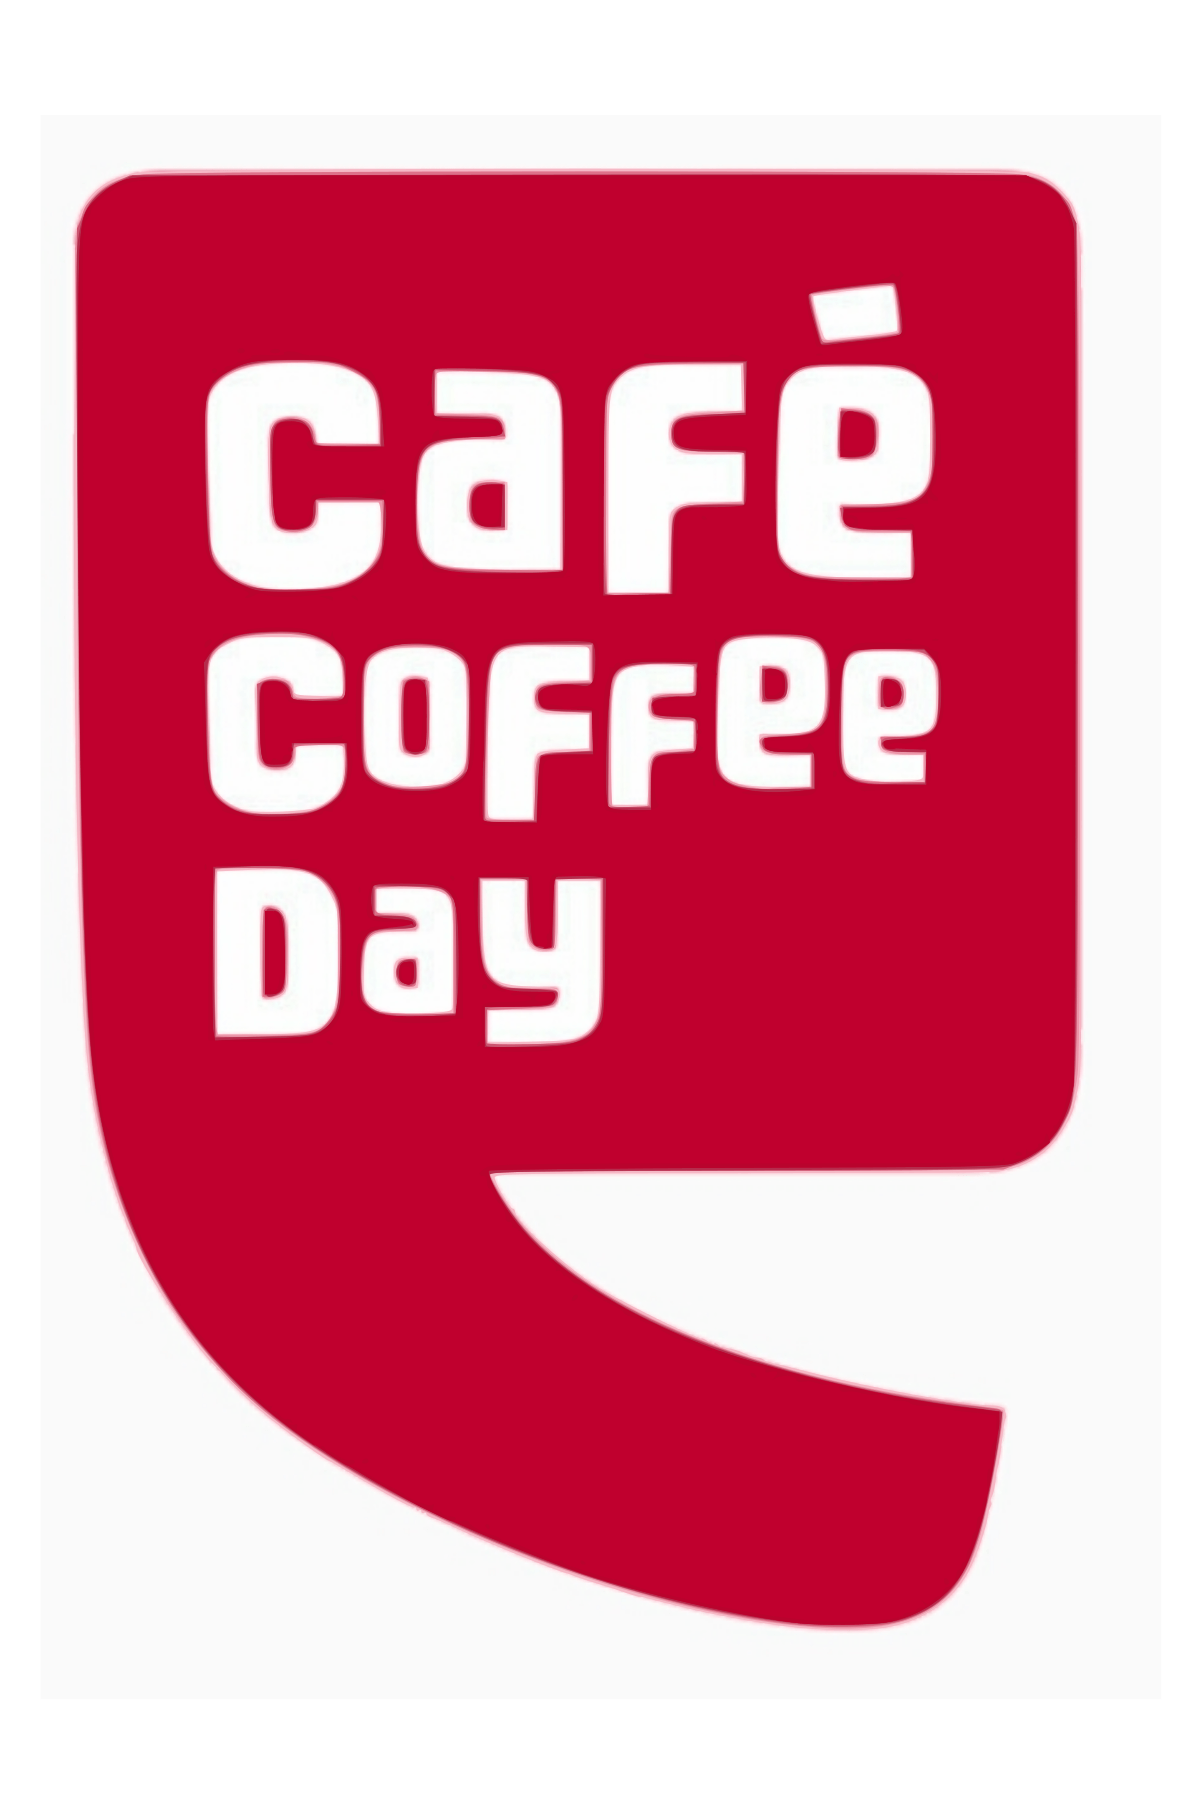 Leading Coffee Brand in USA Logo - upload.wikimedia.org/wikipedia/en/thumb/1/12/Logo_...